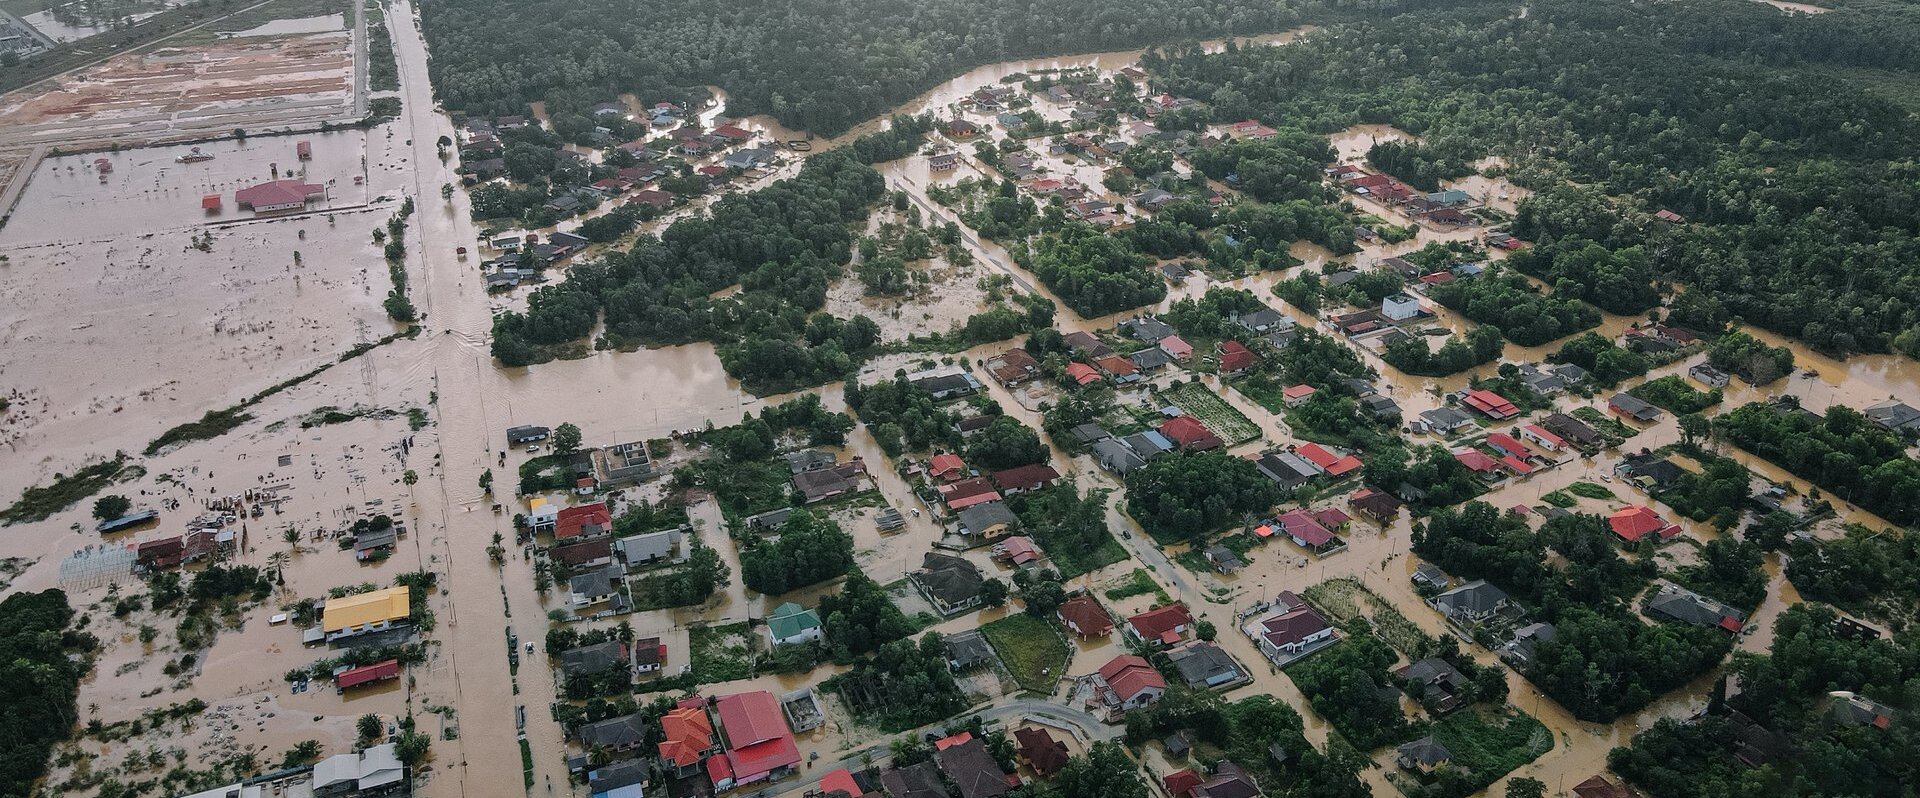 Überflutetes urbanes Gebiet in Malaysia